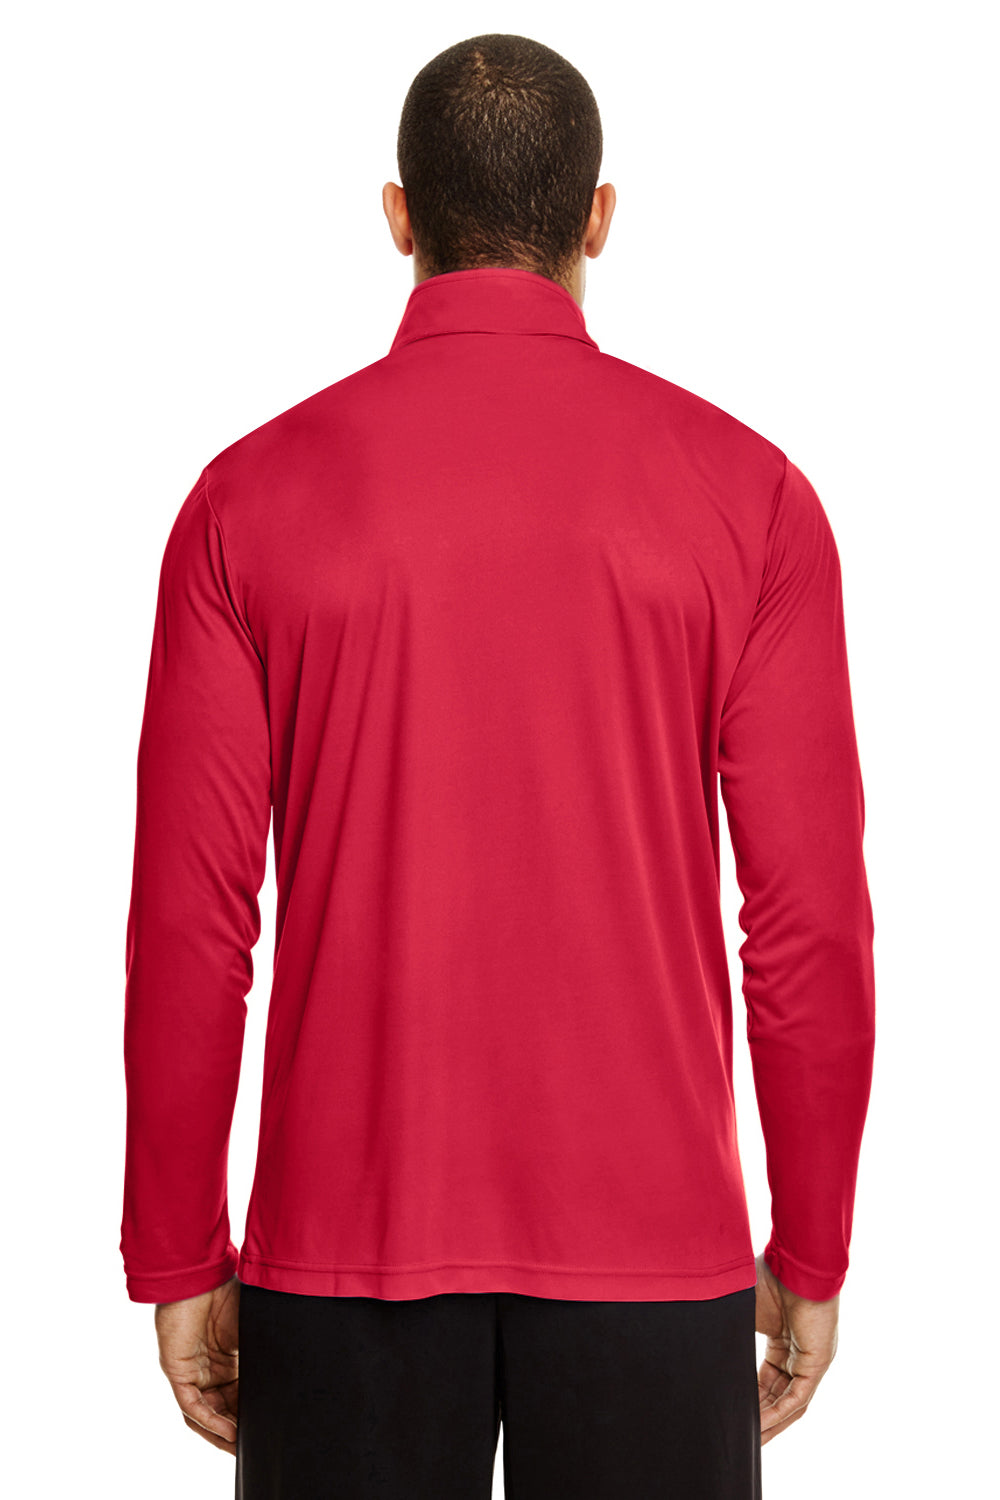 Team 365 TT31 Mens Zone Performance Moisture Wicking 1/4 Zip Sweatshirt Red Back